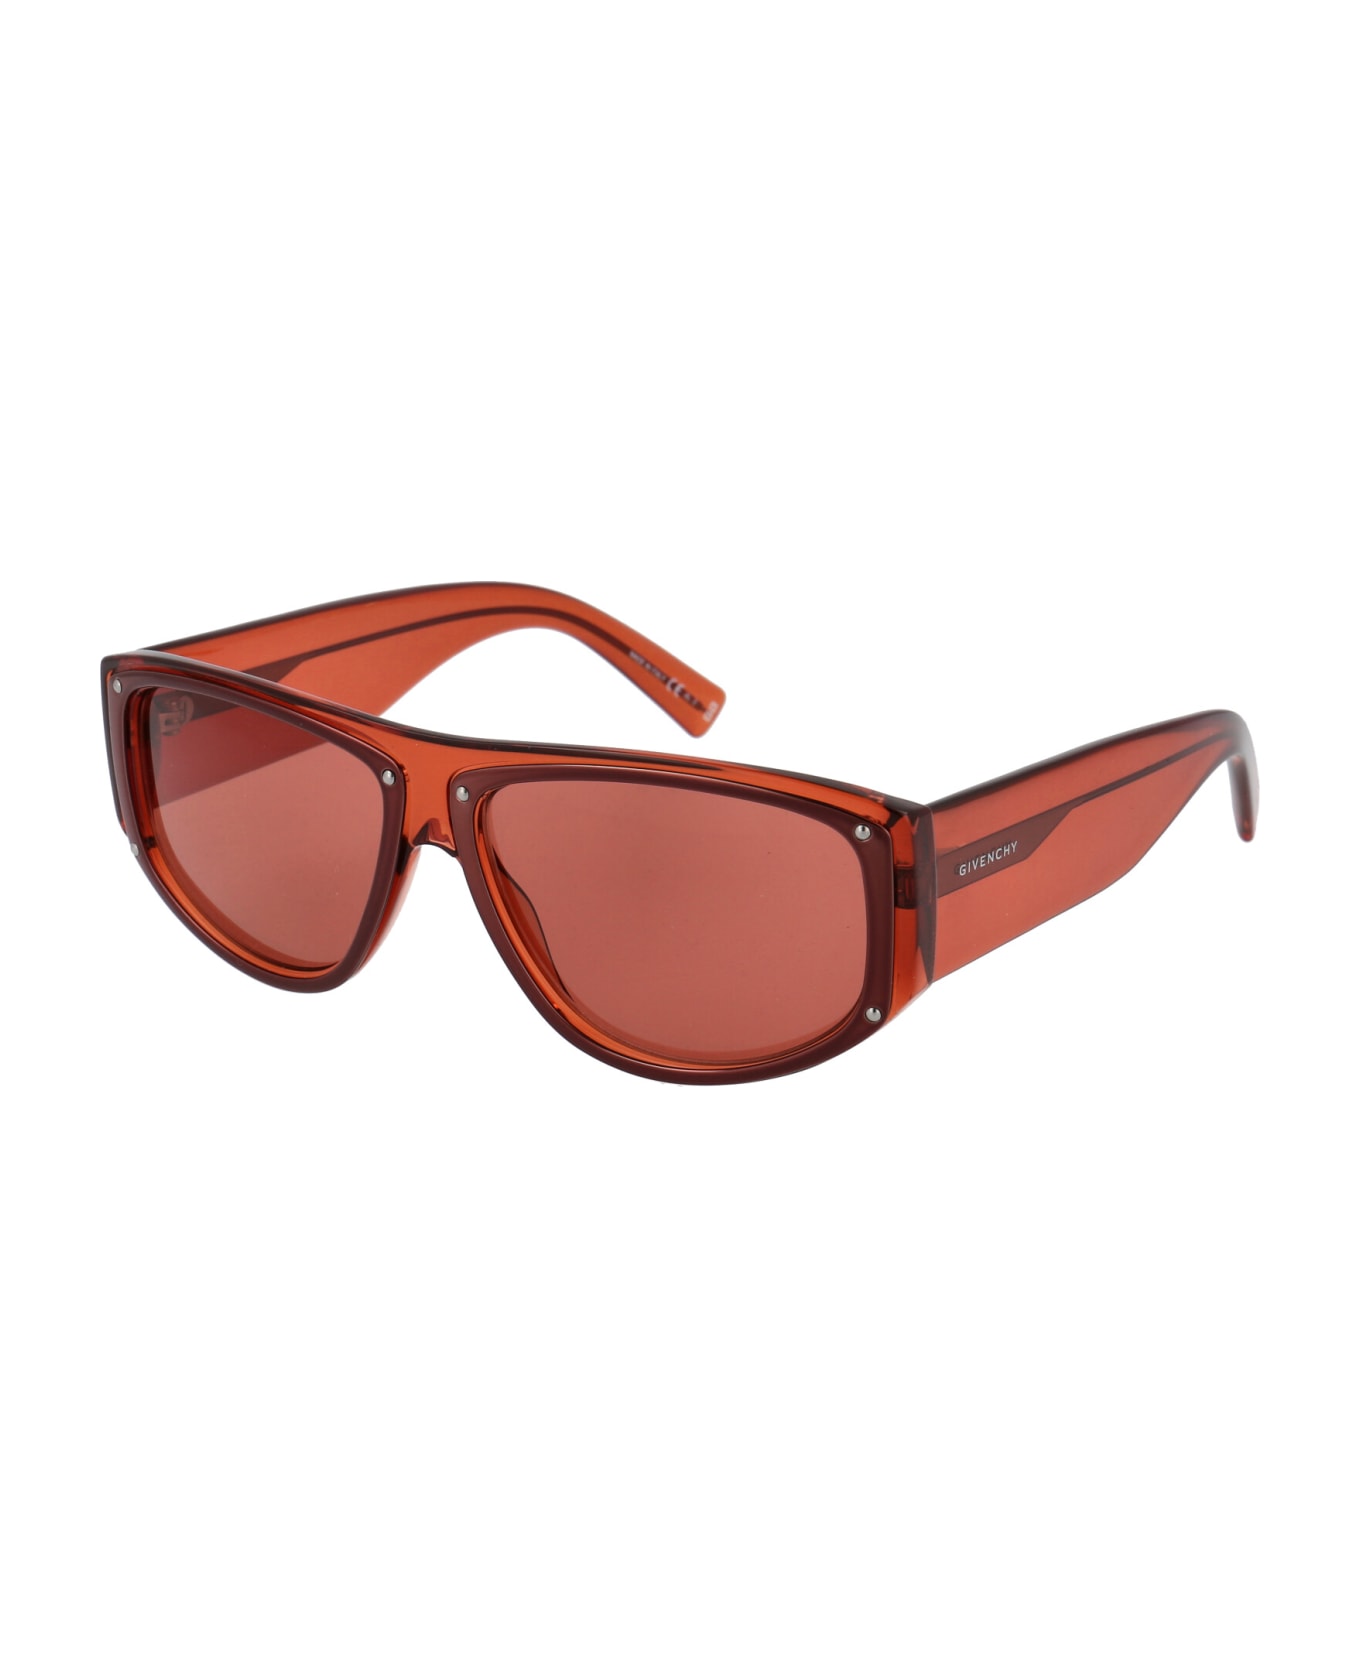 Givenchy Eyewear Gv 7177/s Sunglasses - 2LFU1 TRBRCKPRLCOR